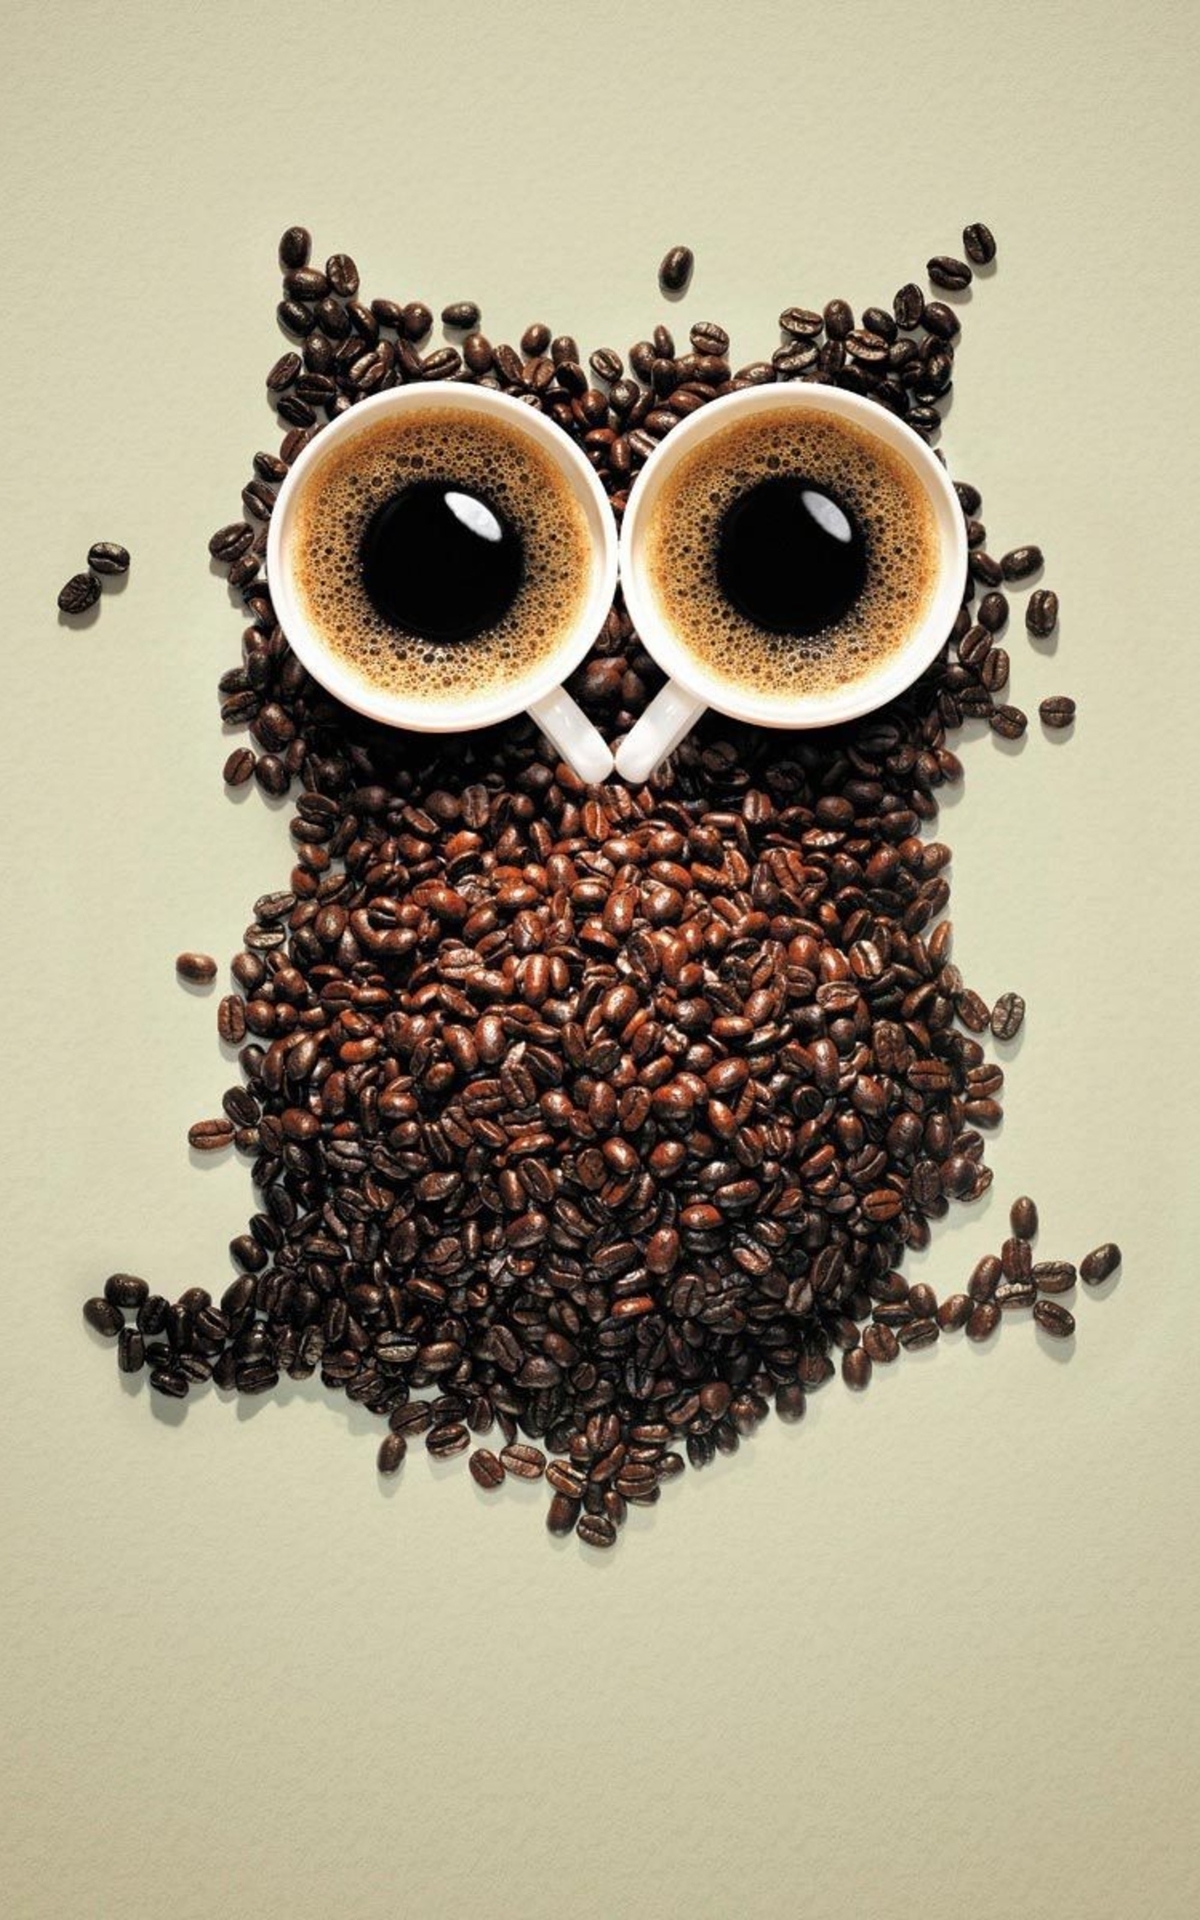 Картинка: Сова, кофе, зёрна, кружки, глаза, зрачки